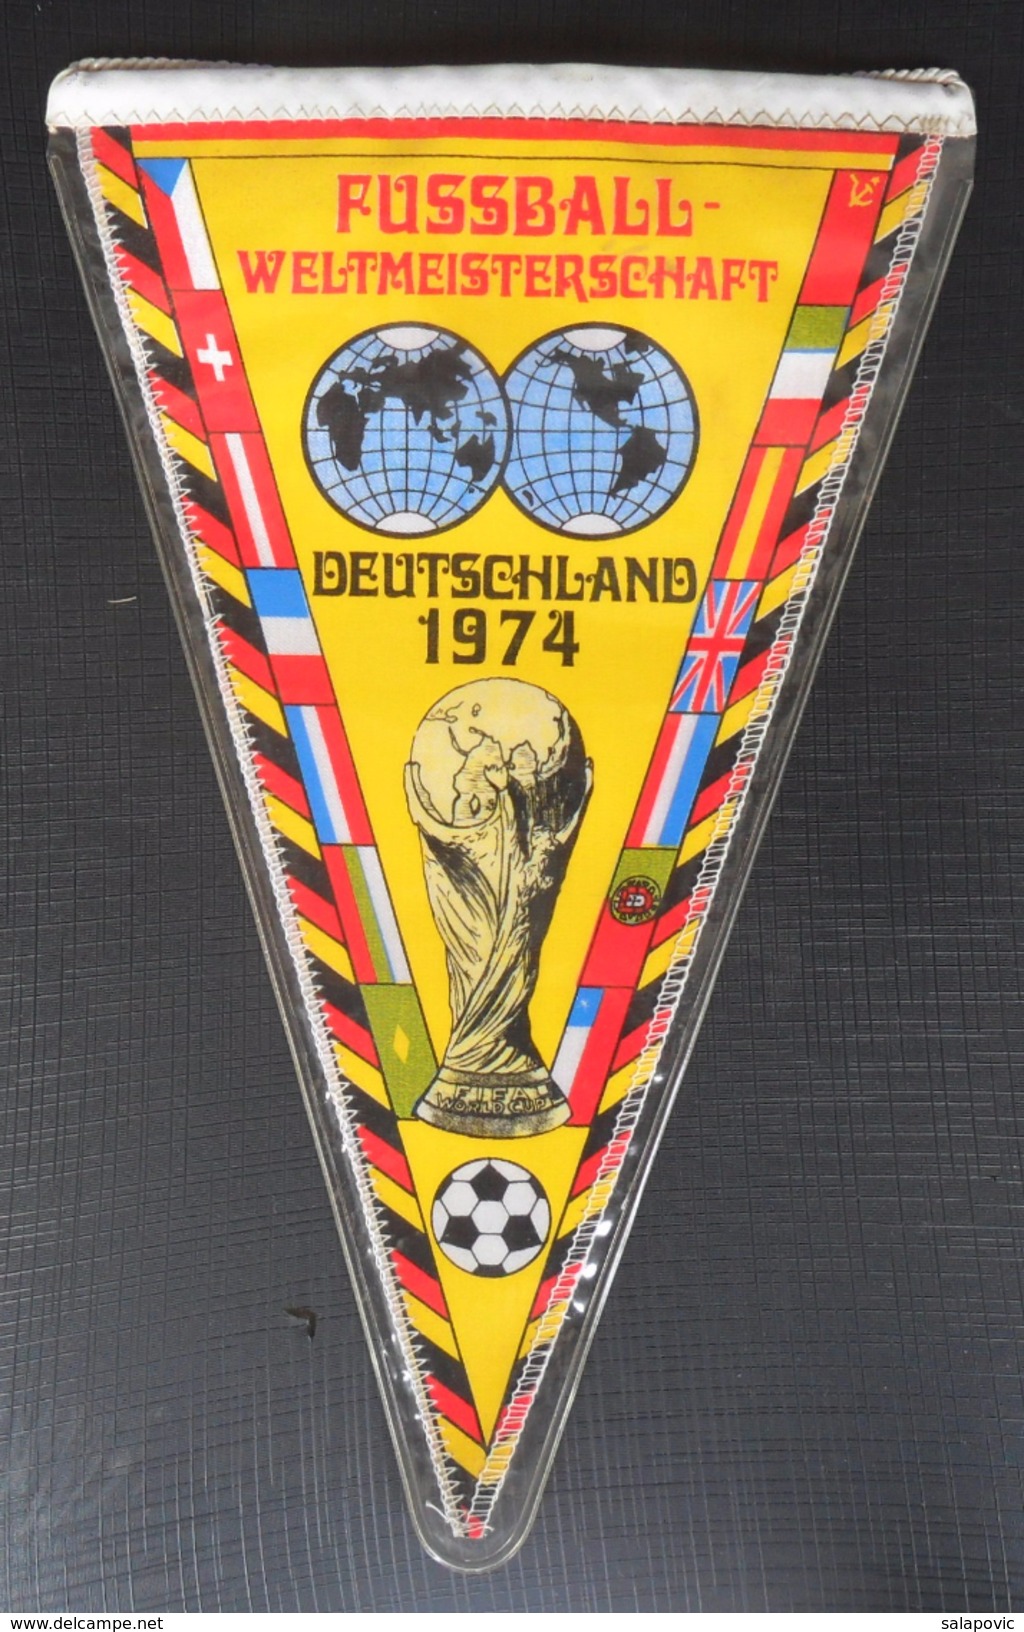 FIFA World Cup 1974 DEUTSCHLAND, GERMANY FOOTBALL CLUB CALCIO OLD PENNANT - Uniformes Recordatorios & Misc